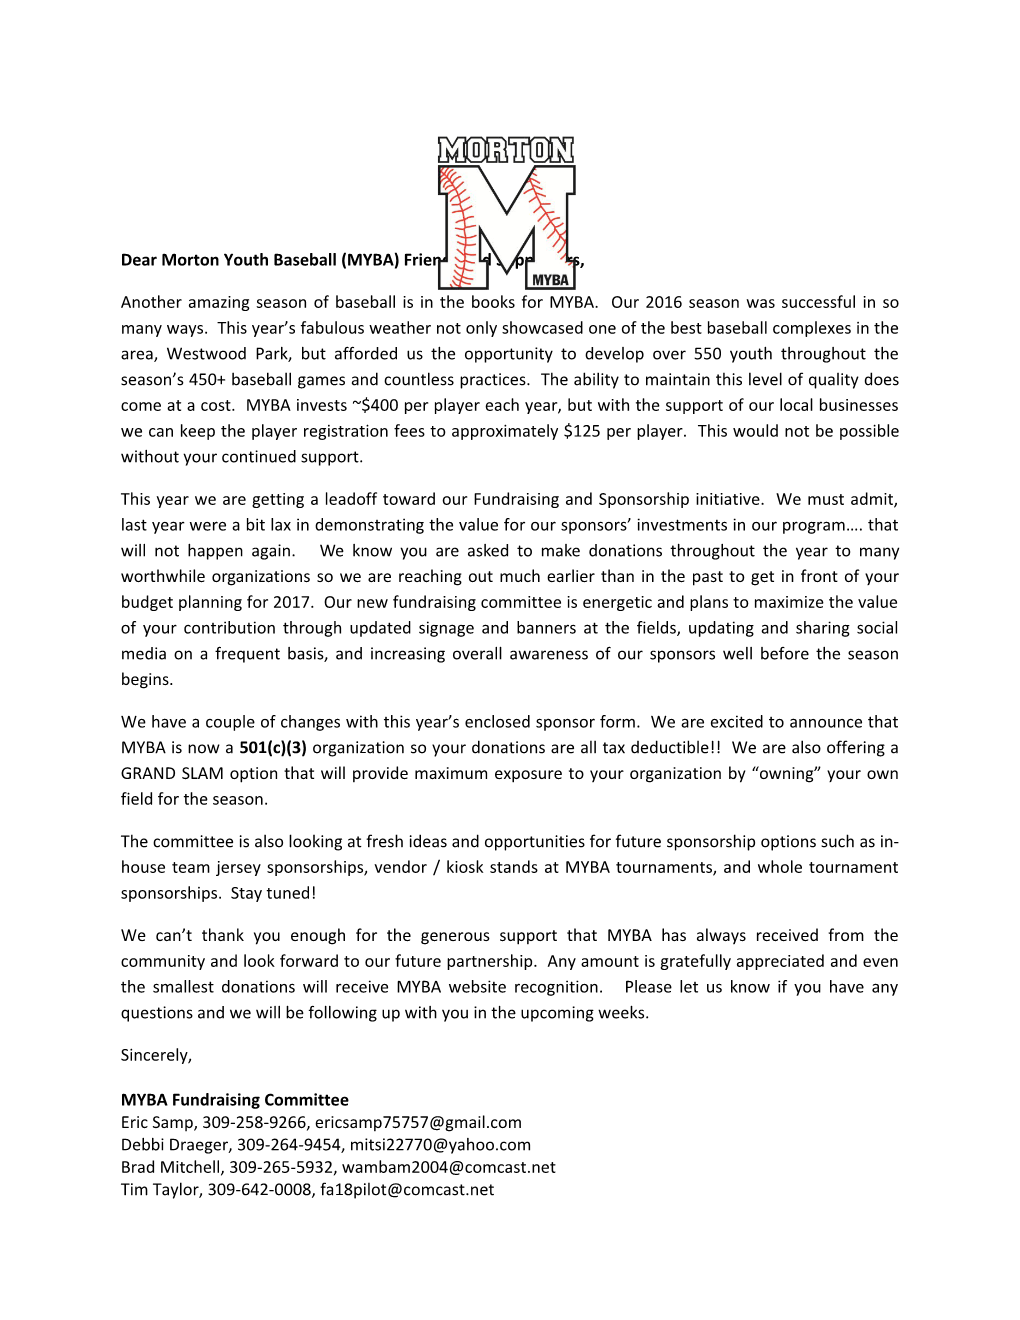 Dear Morton Youth Baseball (MYBA) Friends and Supporters